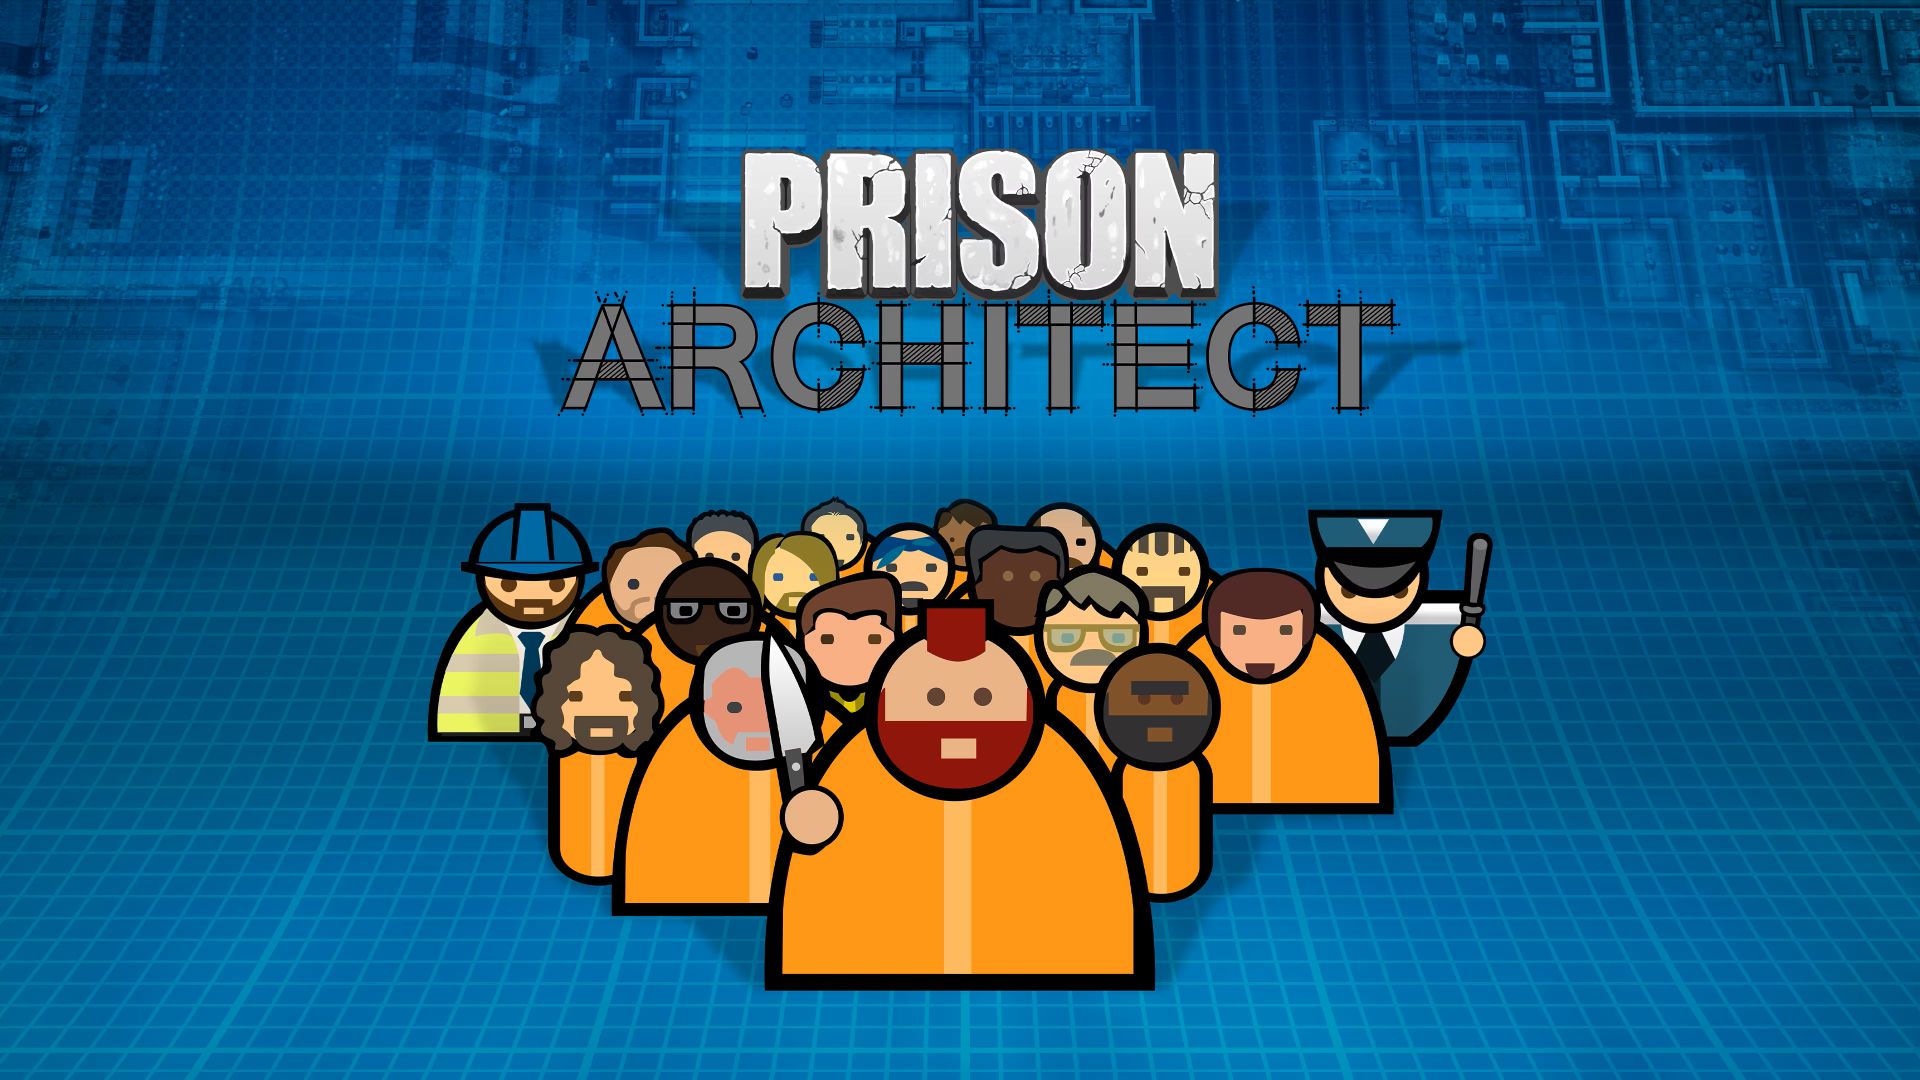 Video: Prison Architect – Sunset Trailer